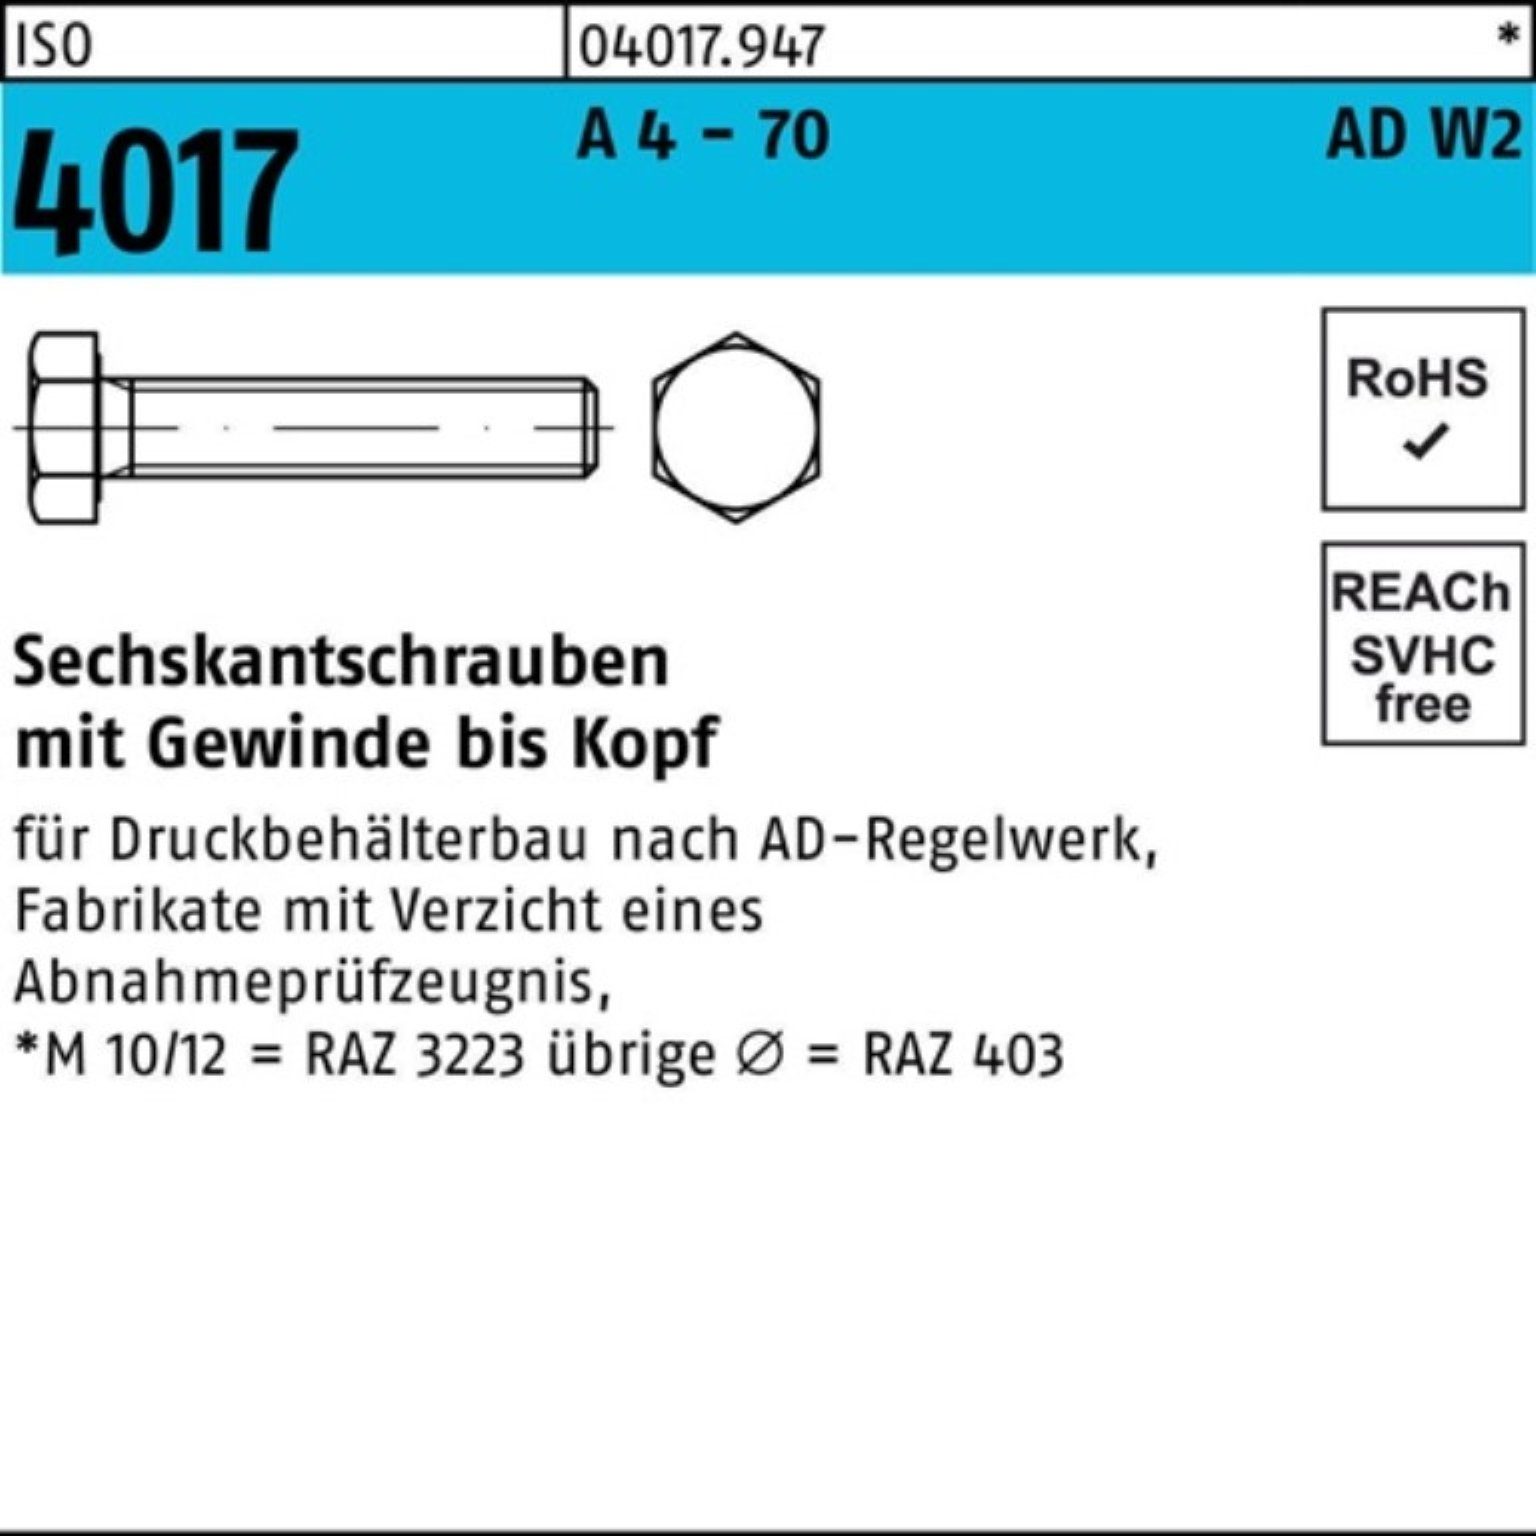 Bufab Sechskantschraube 100er Pack Sechskantschraube ISO 4017 VG M20x 90 A 4 - 70 AD-W2 10 St